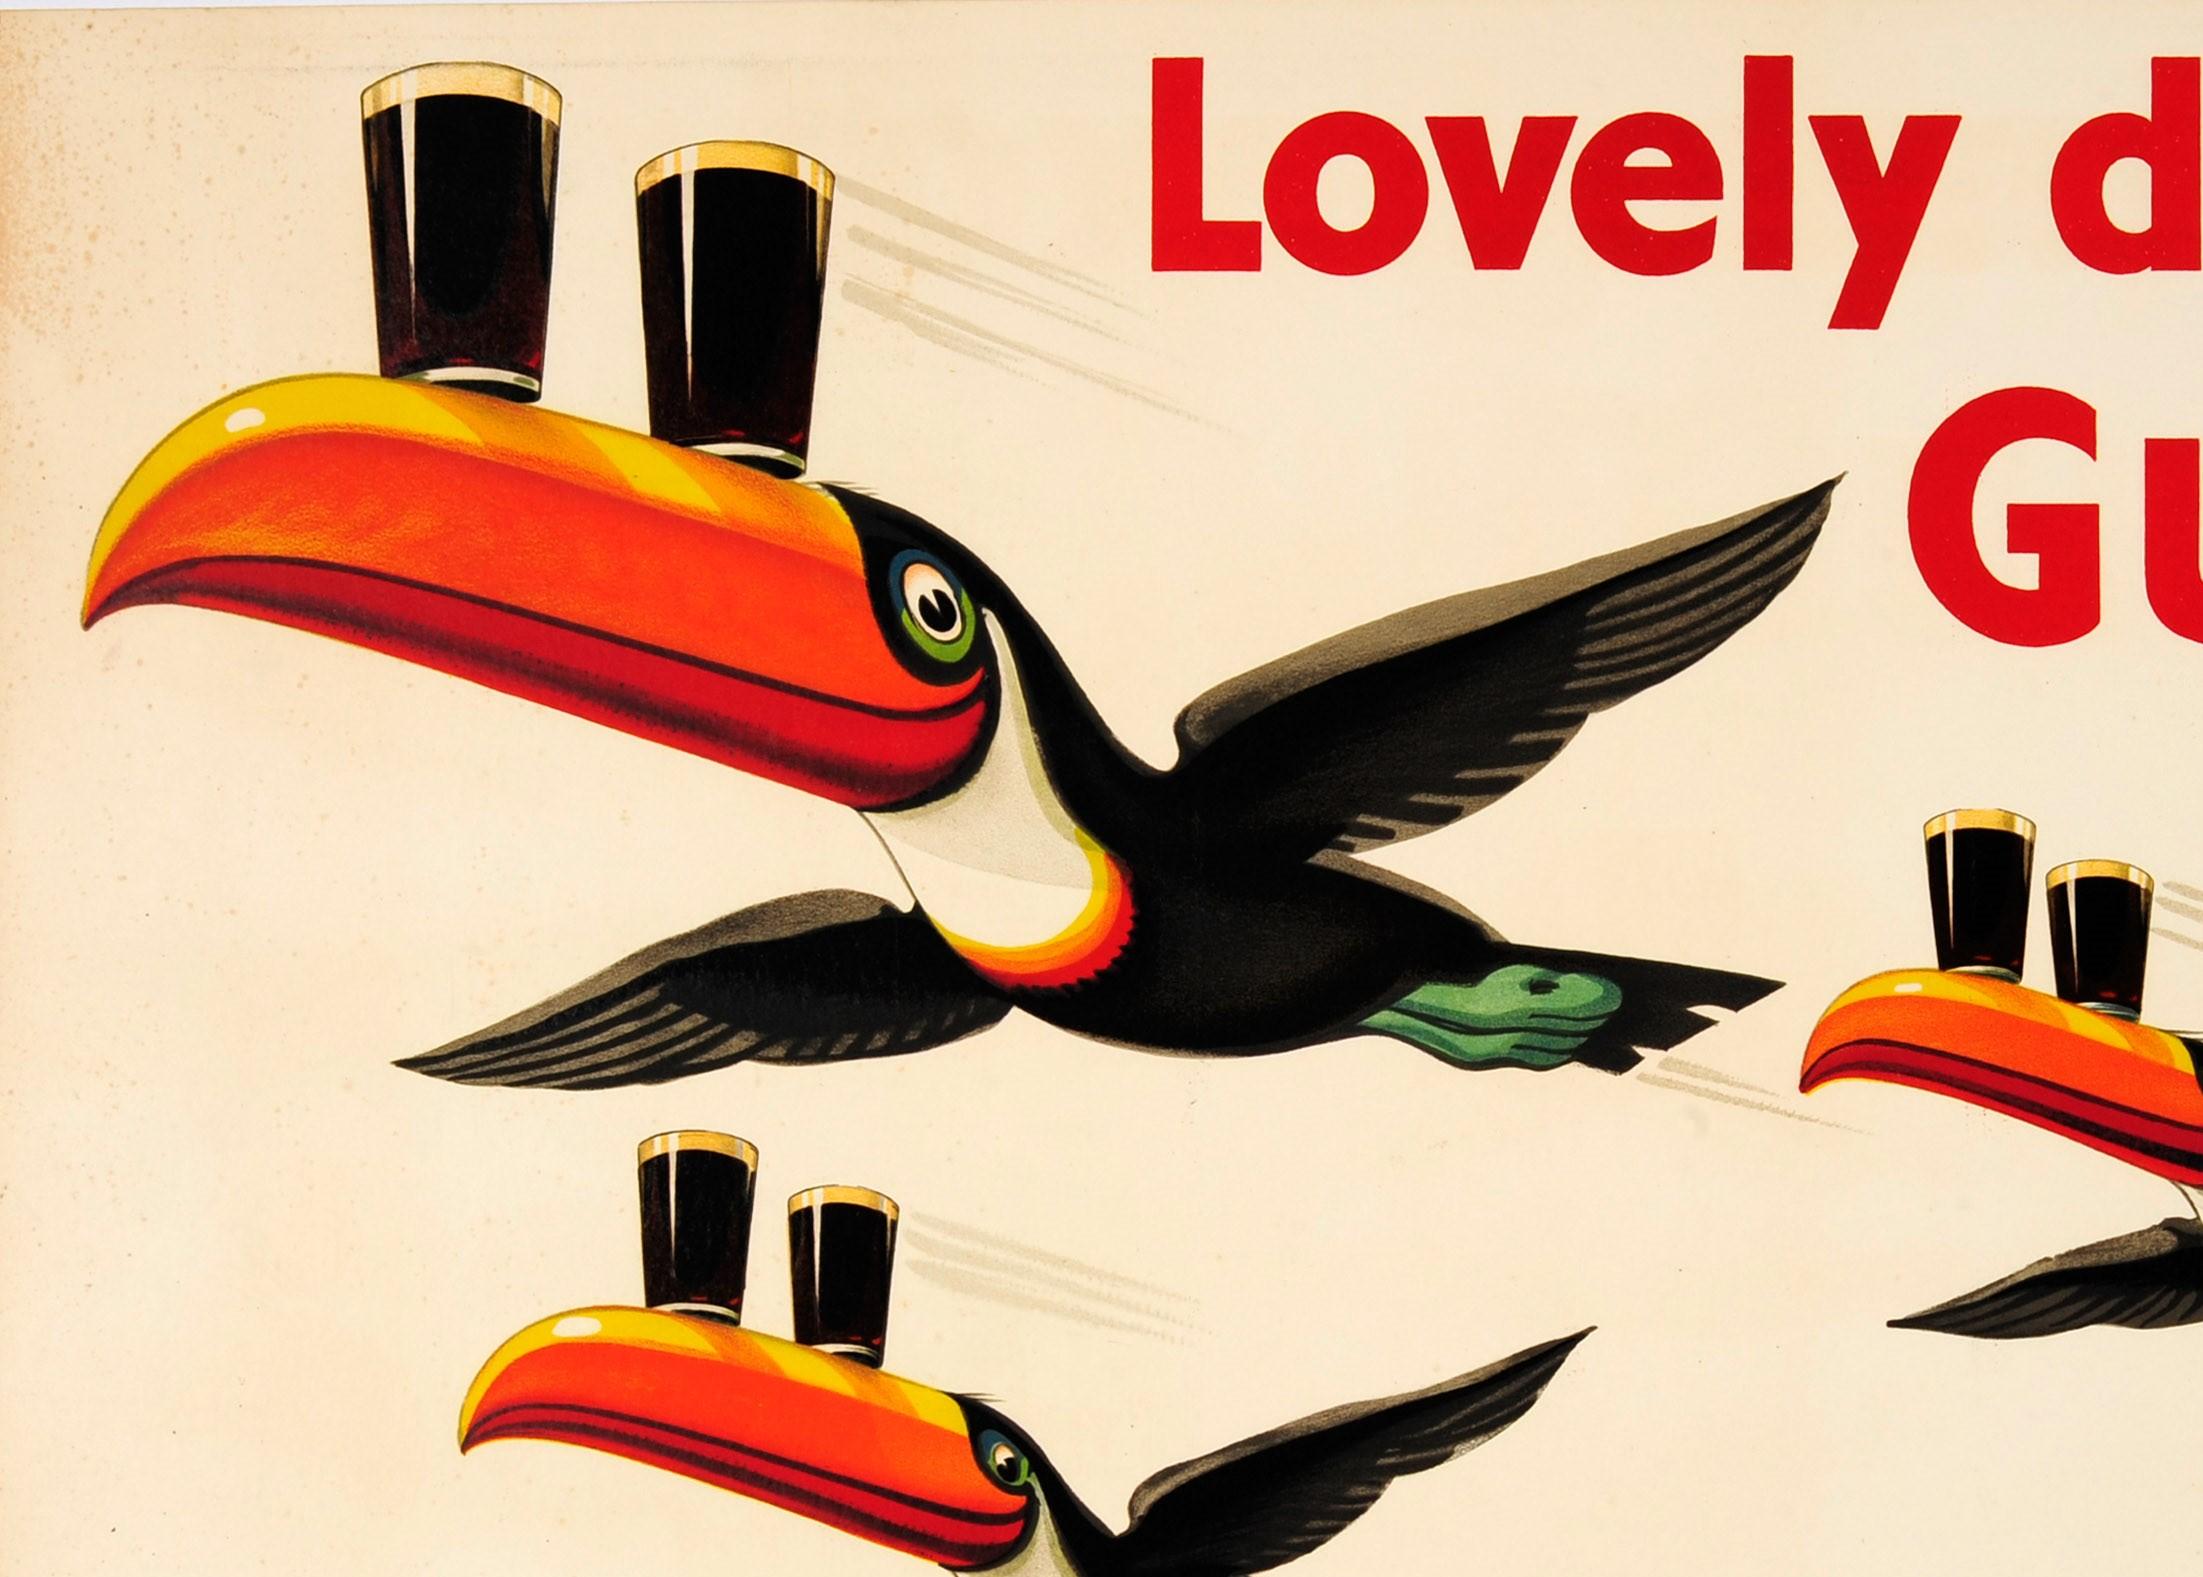 Original Vintage Guinness Poster - Lovely Day For A Guinness - RAF Toucan Design - Print by John Gilroy